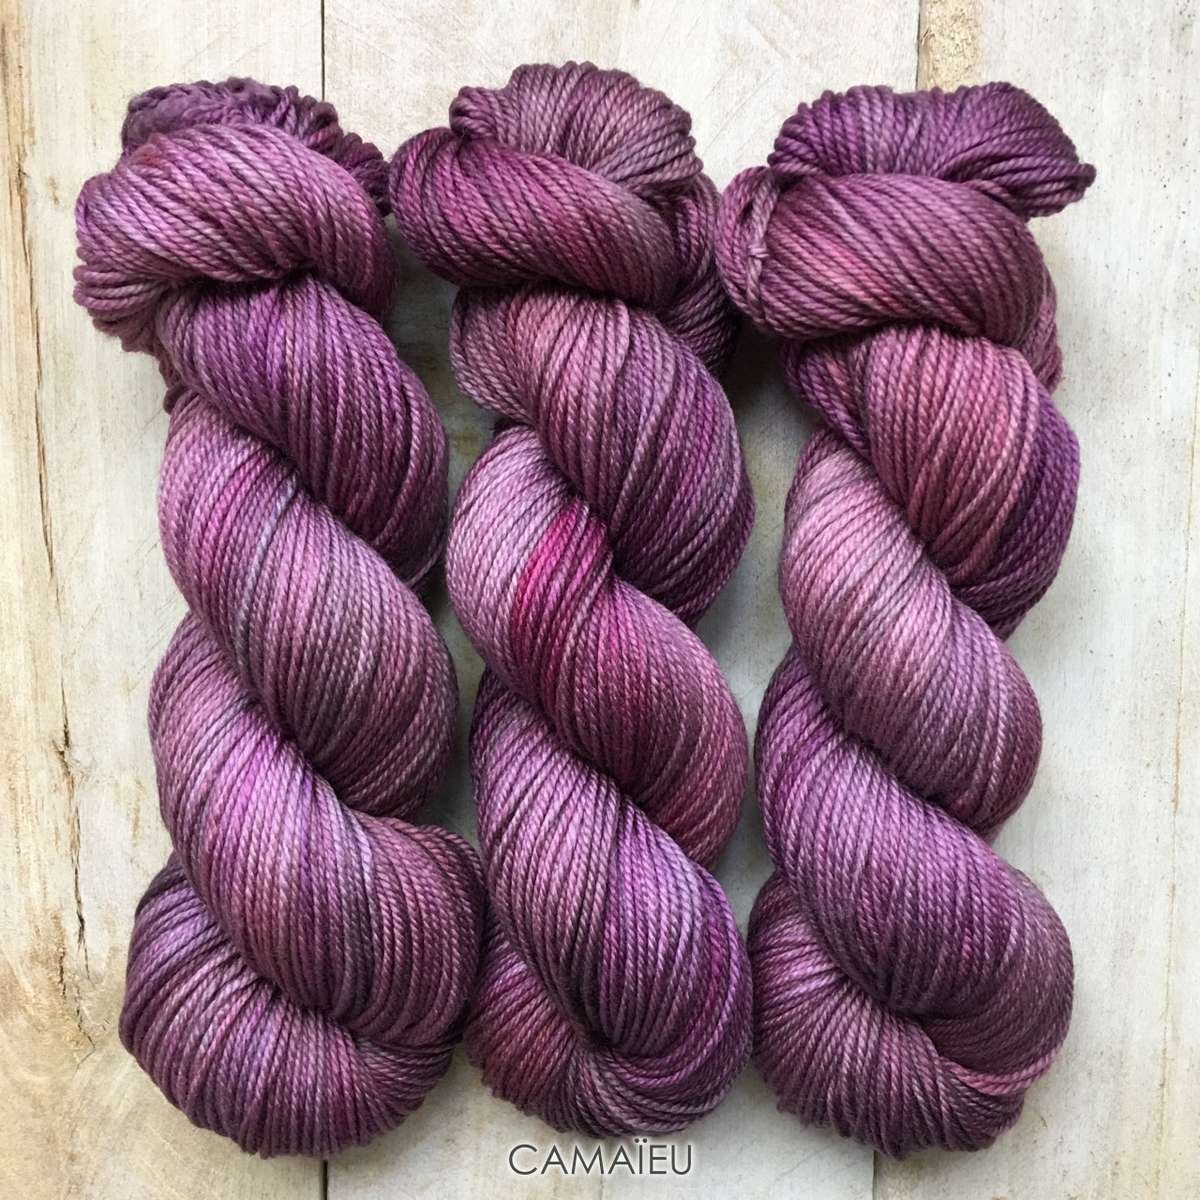 Hand-dyed yarn Louise Robert Camaïeu